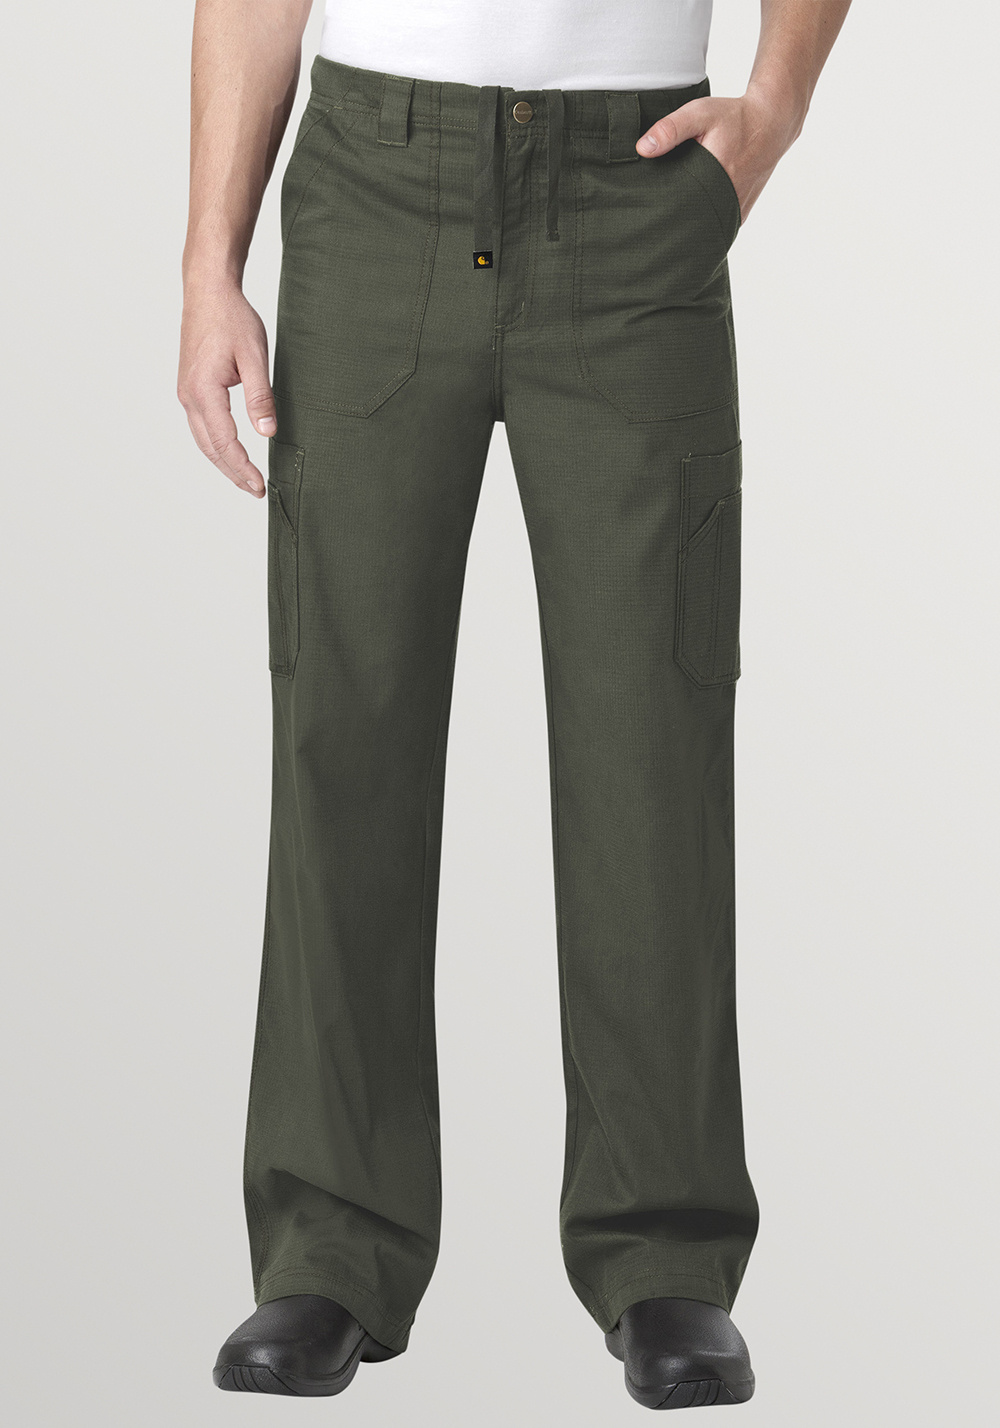 Carhartt Men's Multi Cargo Pant, Olive, S